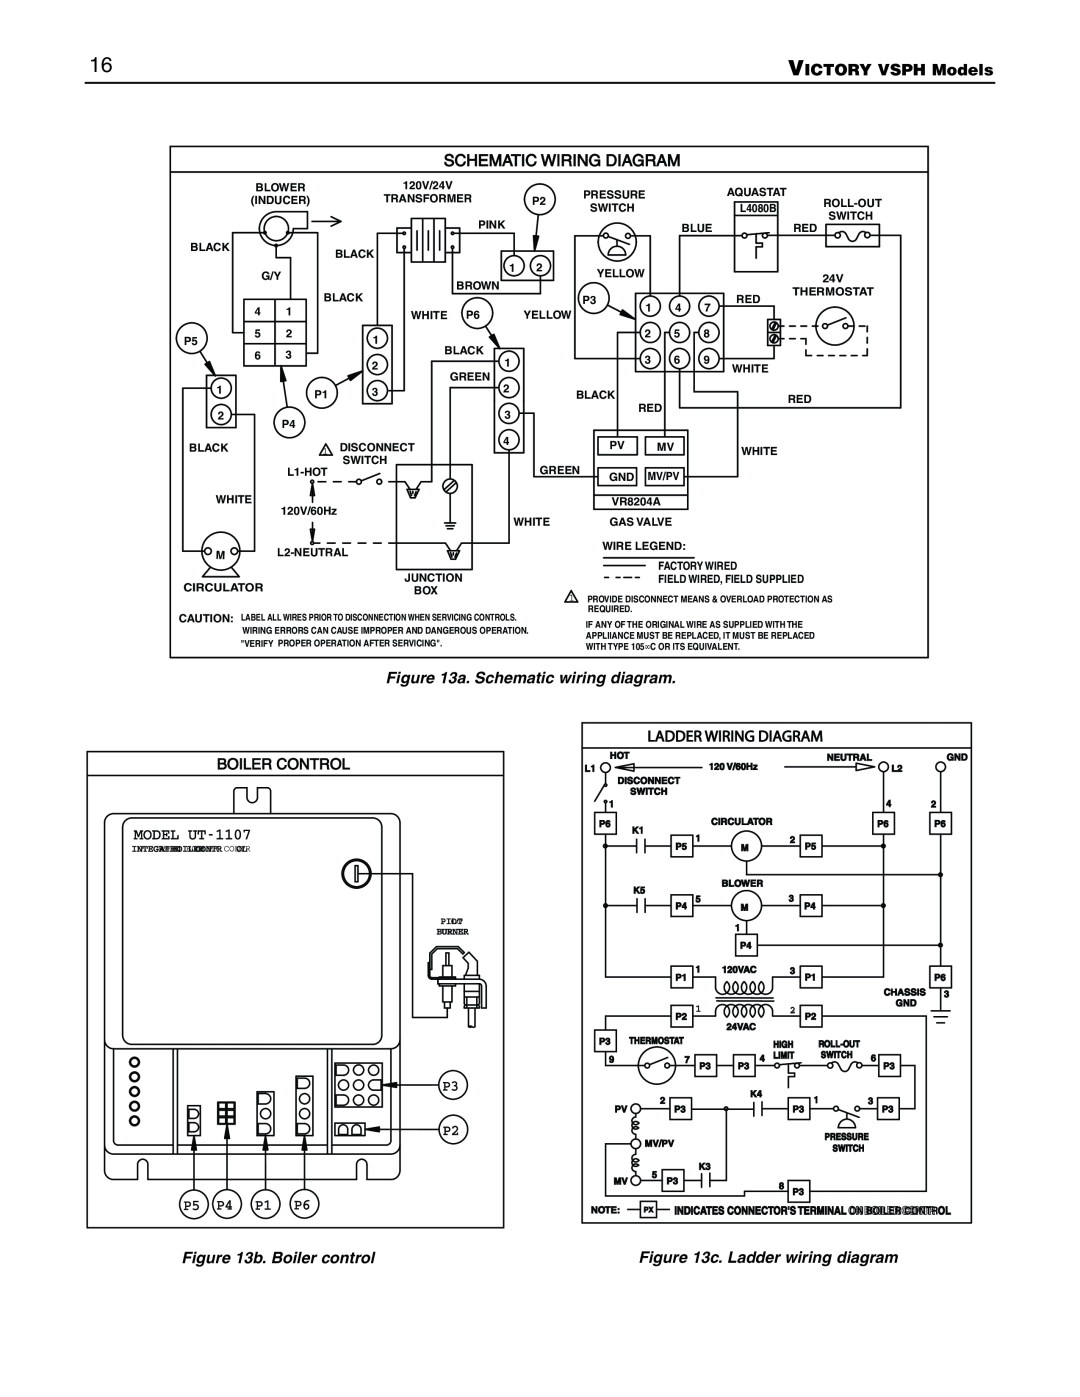 Slant/Fin VSPH-60, VSPH-180 VICTORY VSPH Models, a. Schematic wiring diagram, b. Boiler control, c. Ladder wiring diagram 